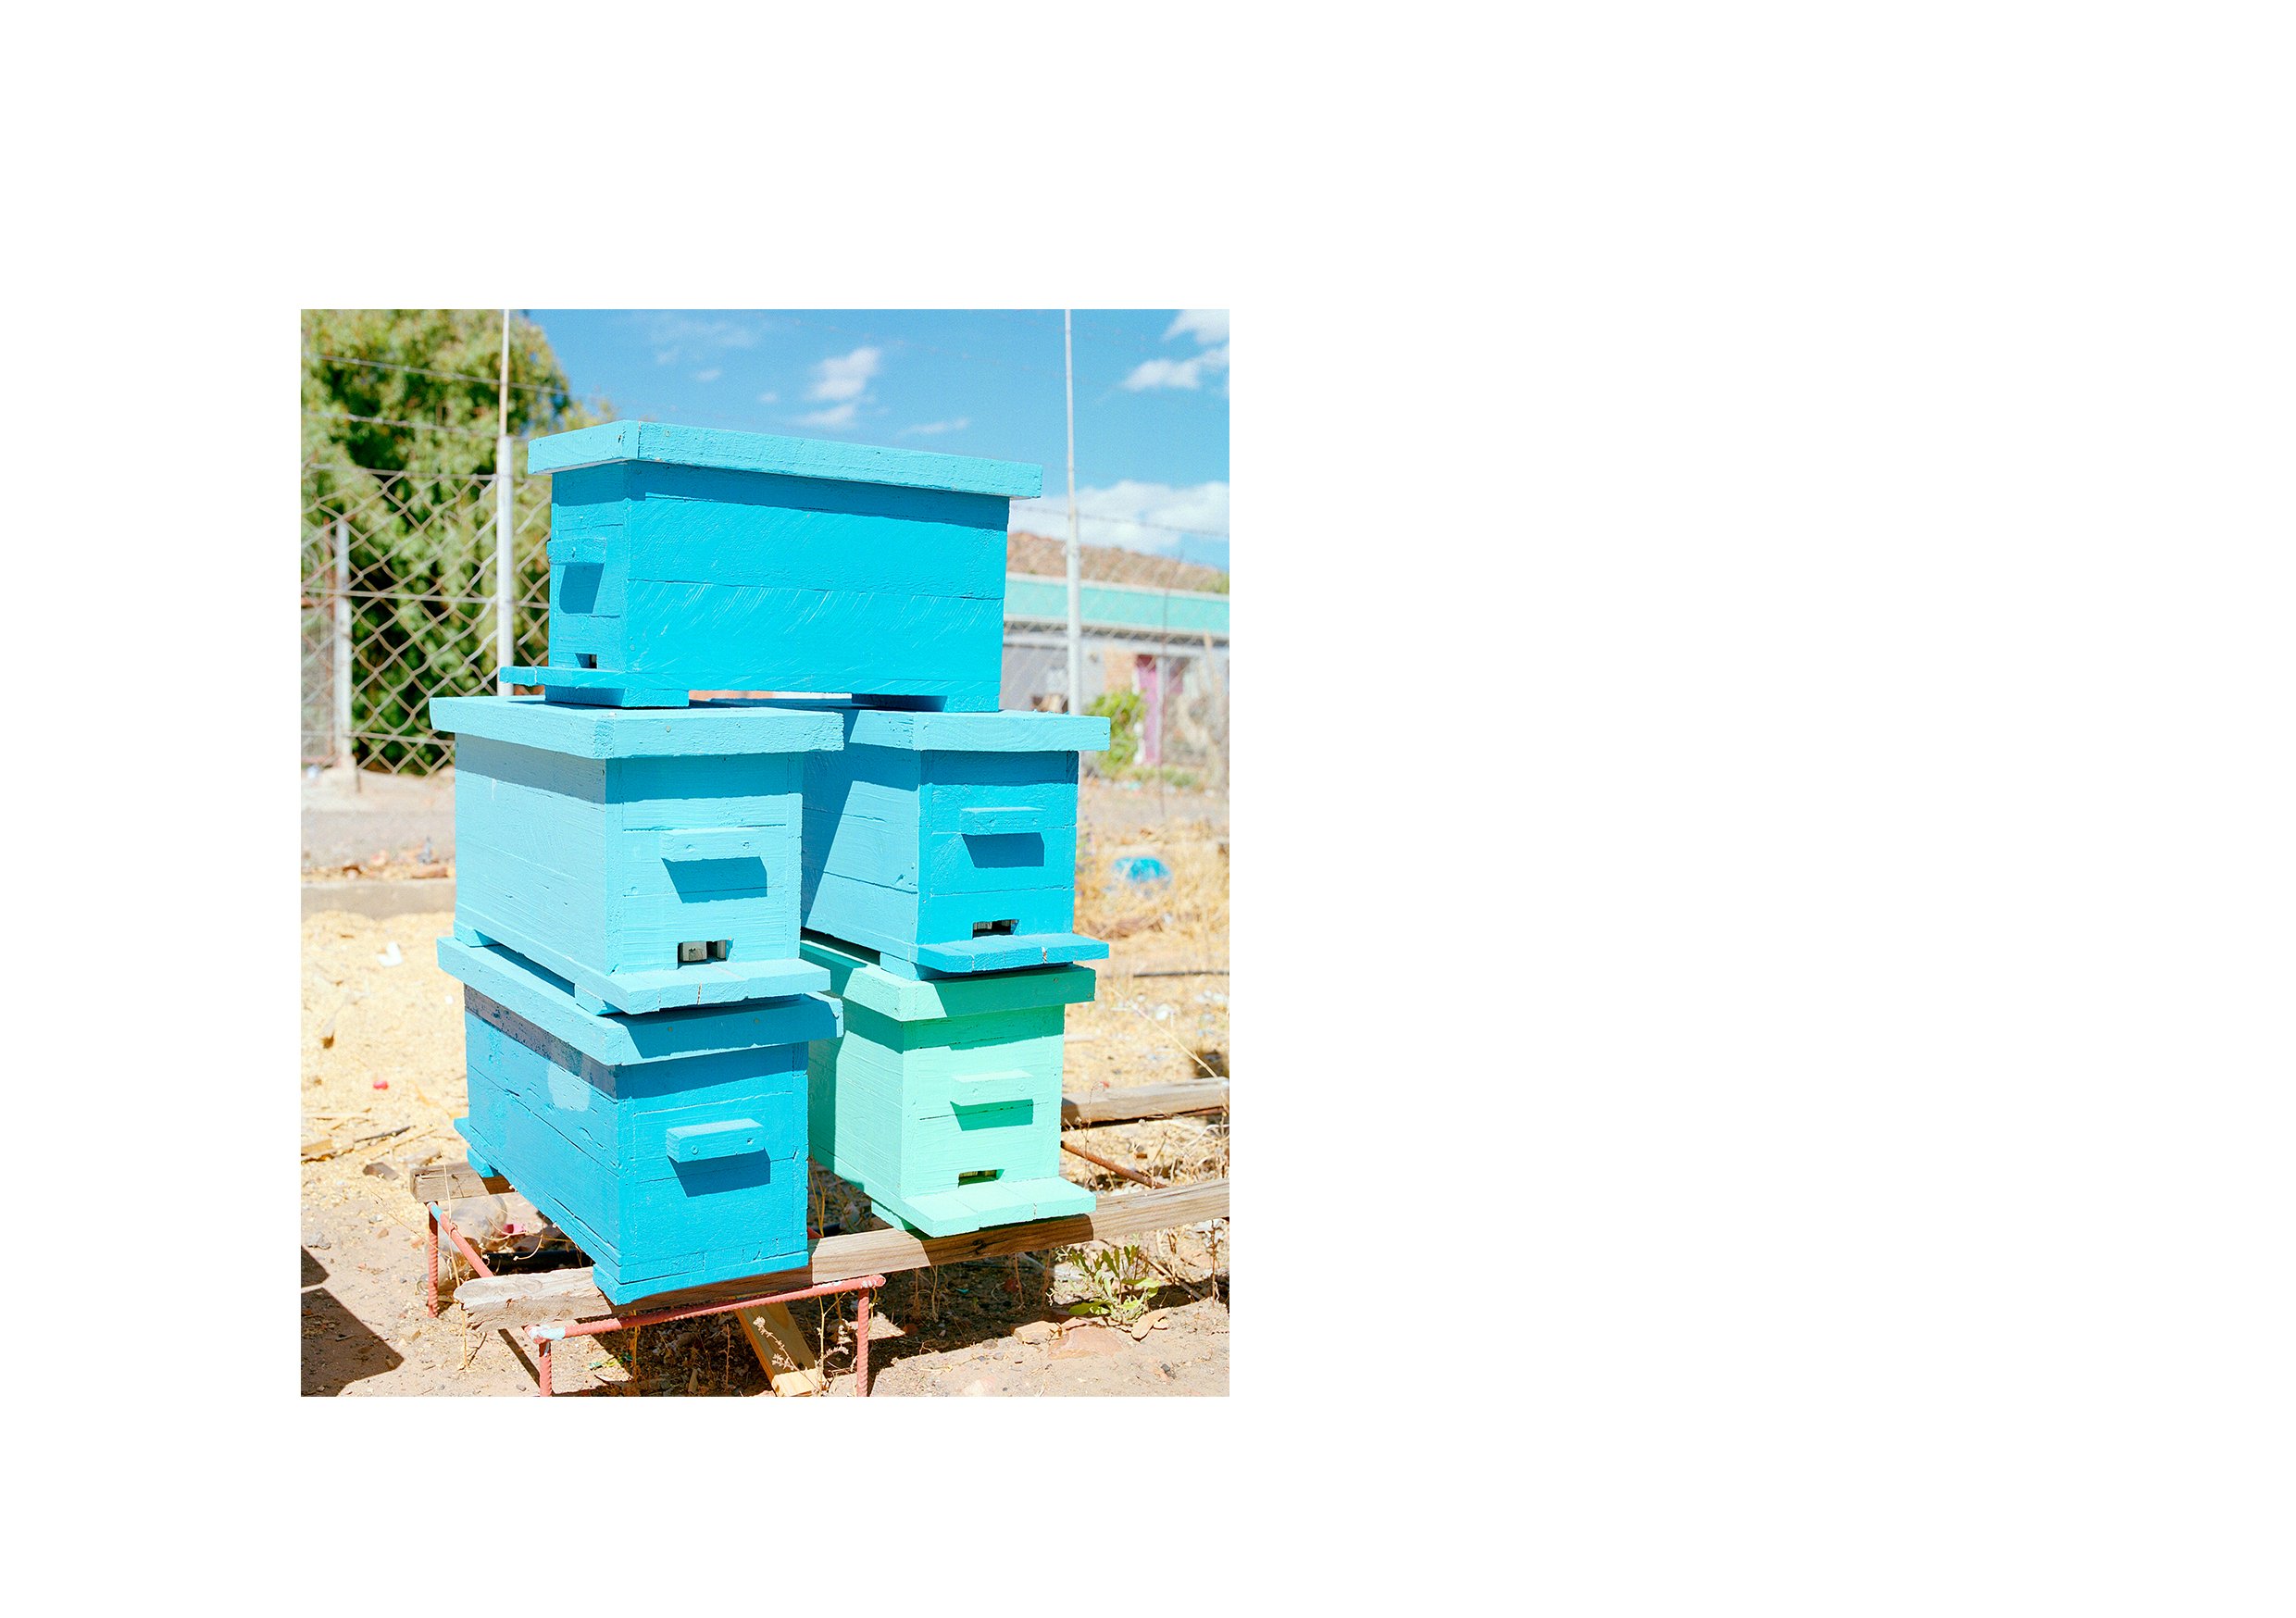  Blue Hives, Touwsriver 